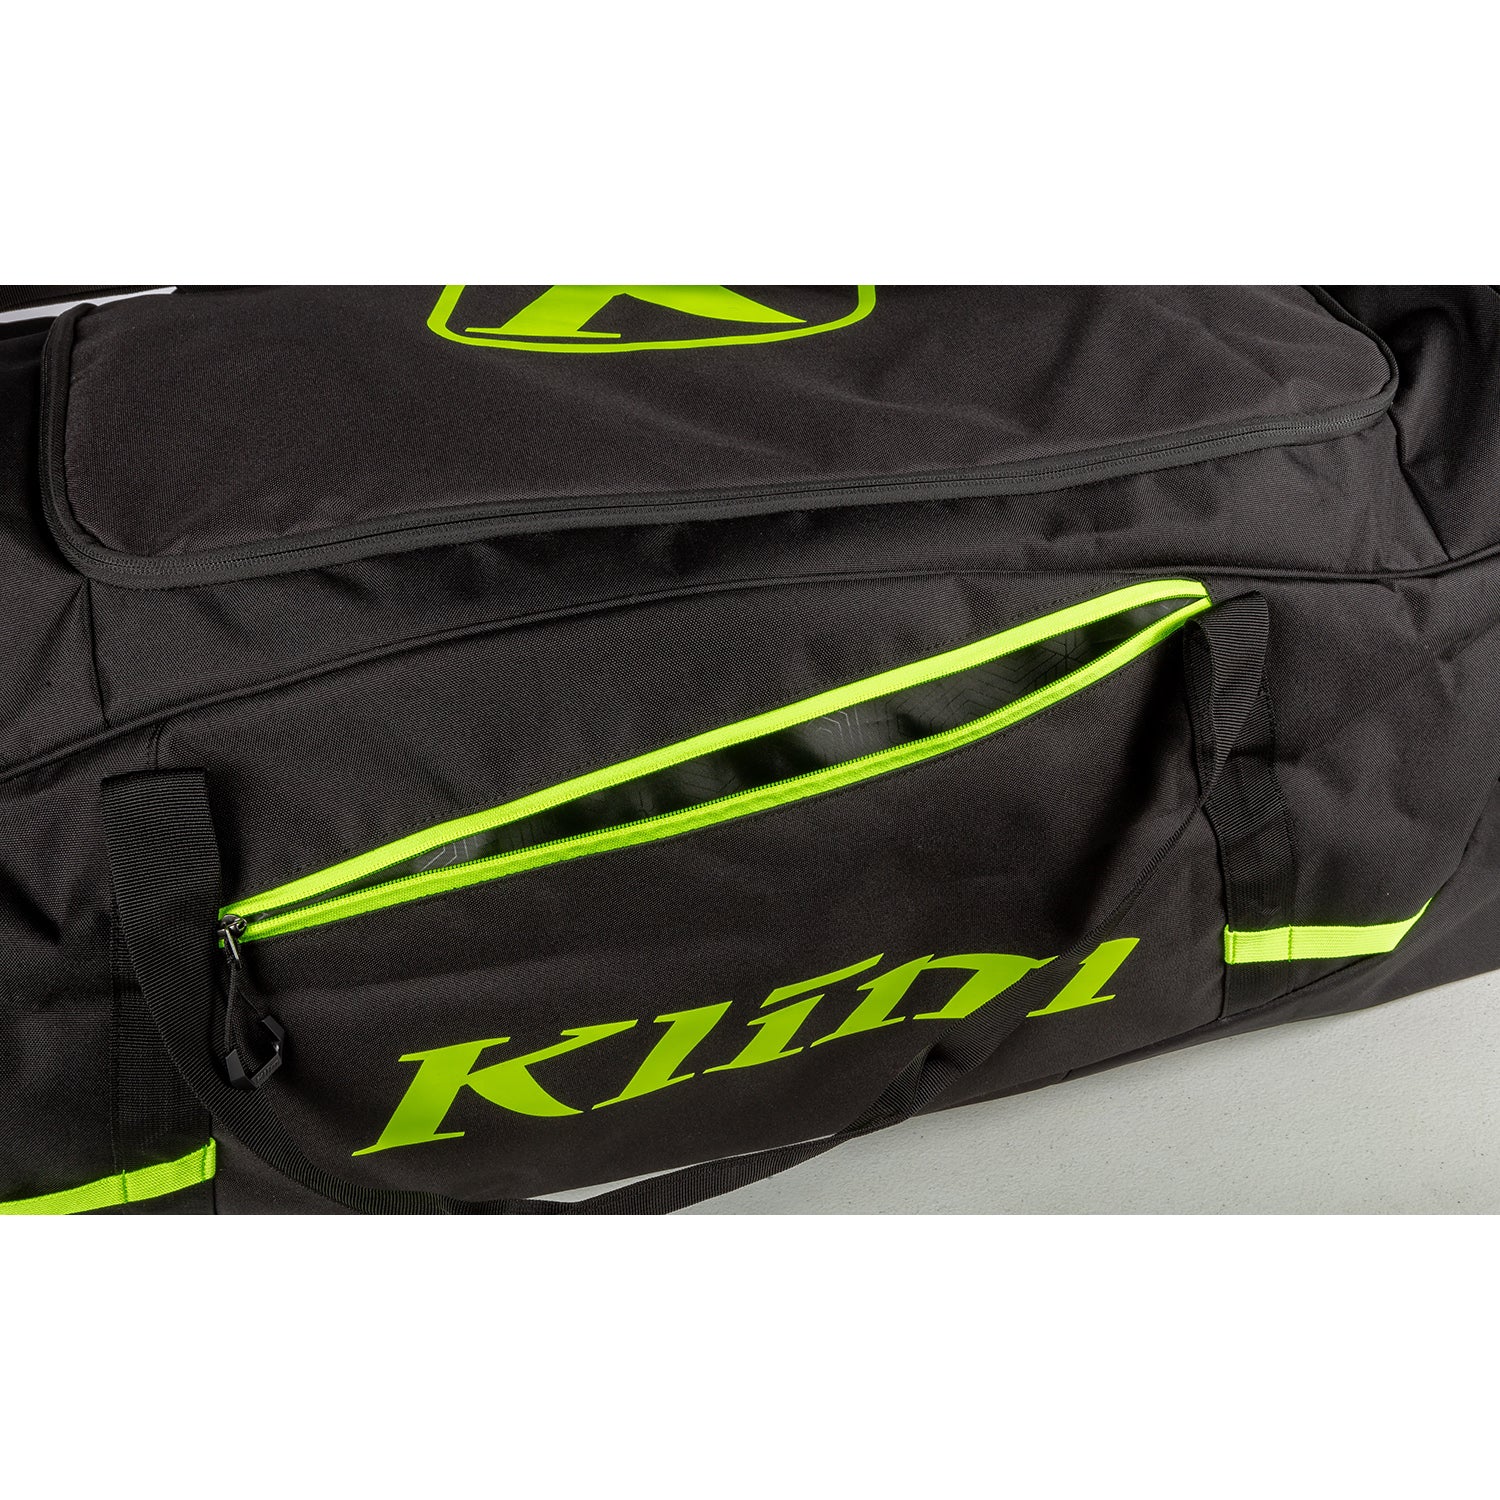 Kodiak Bag by Klim - Slavens Racing